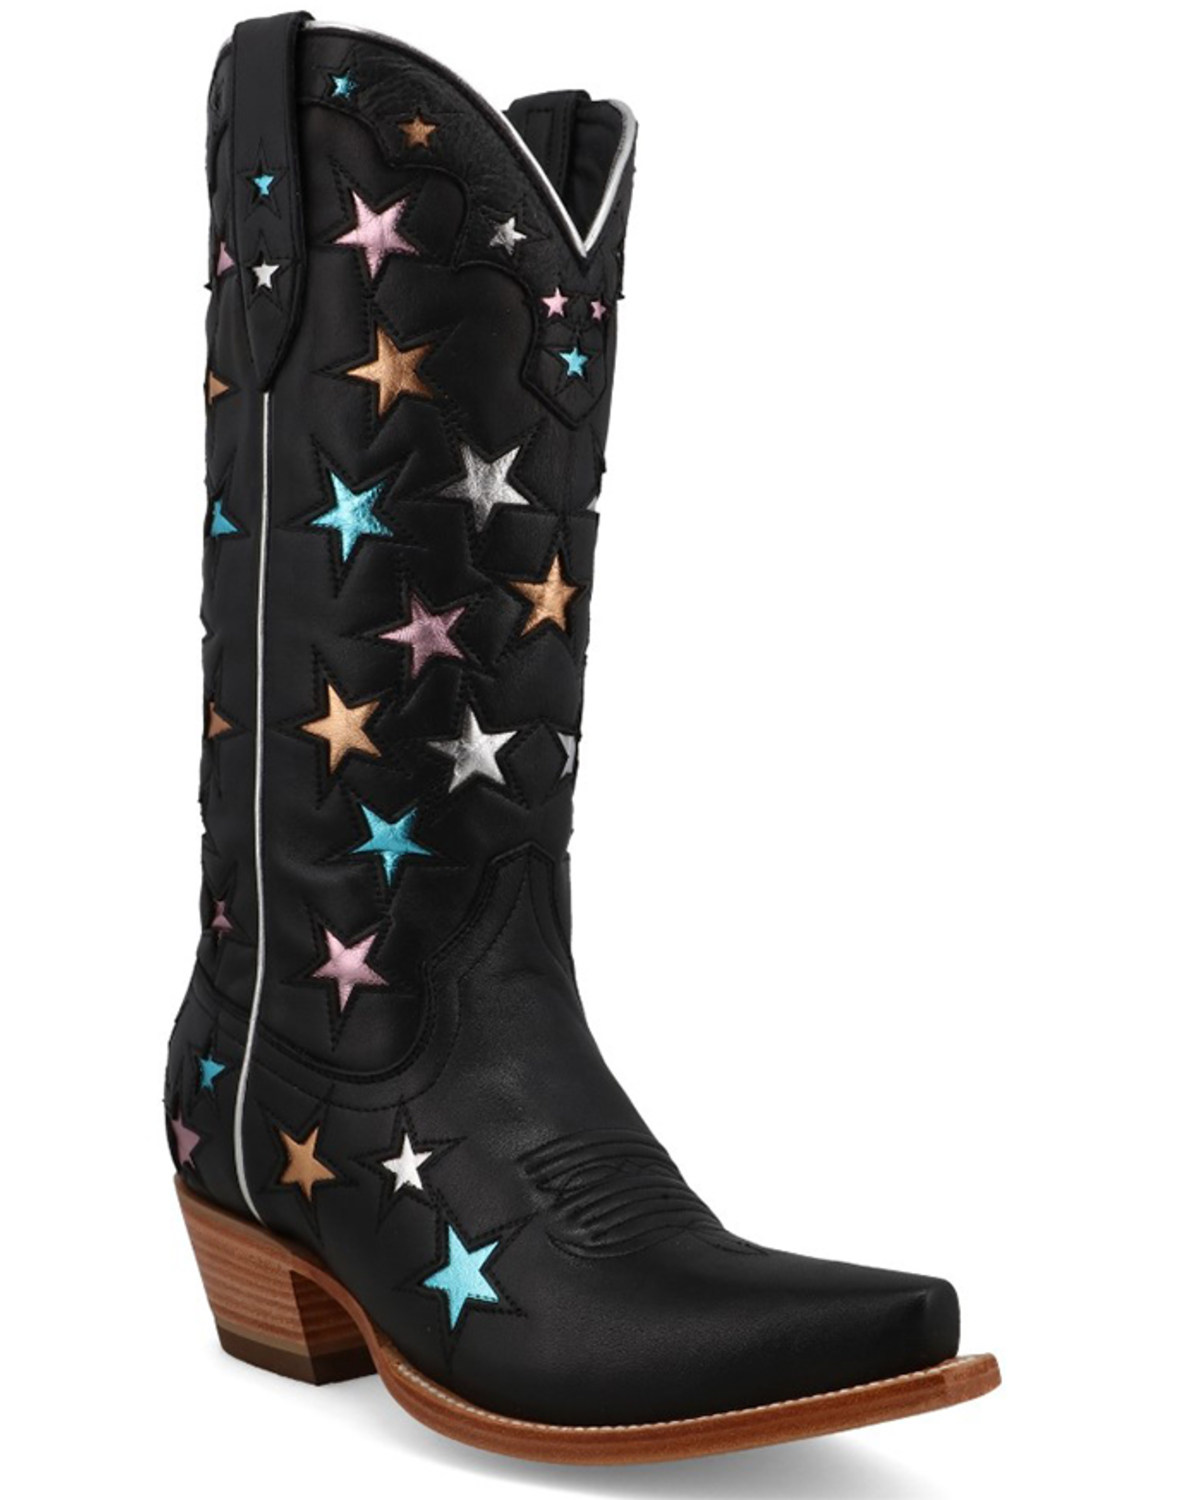 Black Star Women's Houston Western Boots - Snip Toe